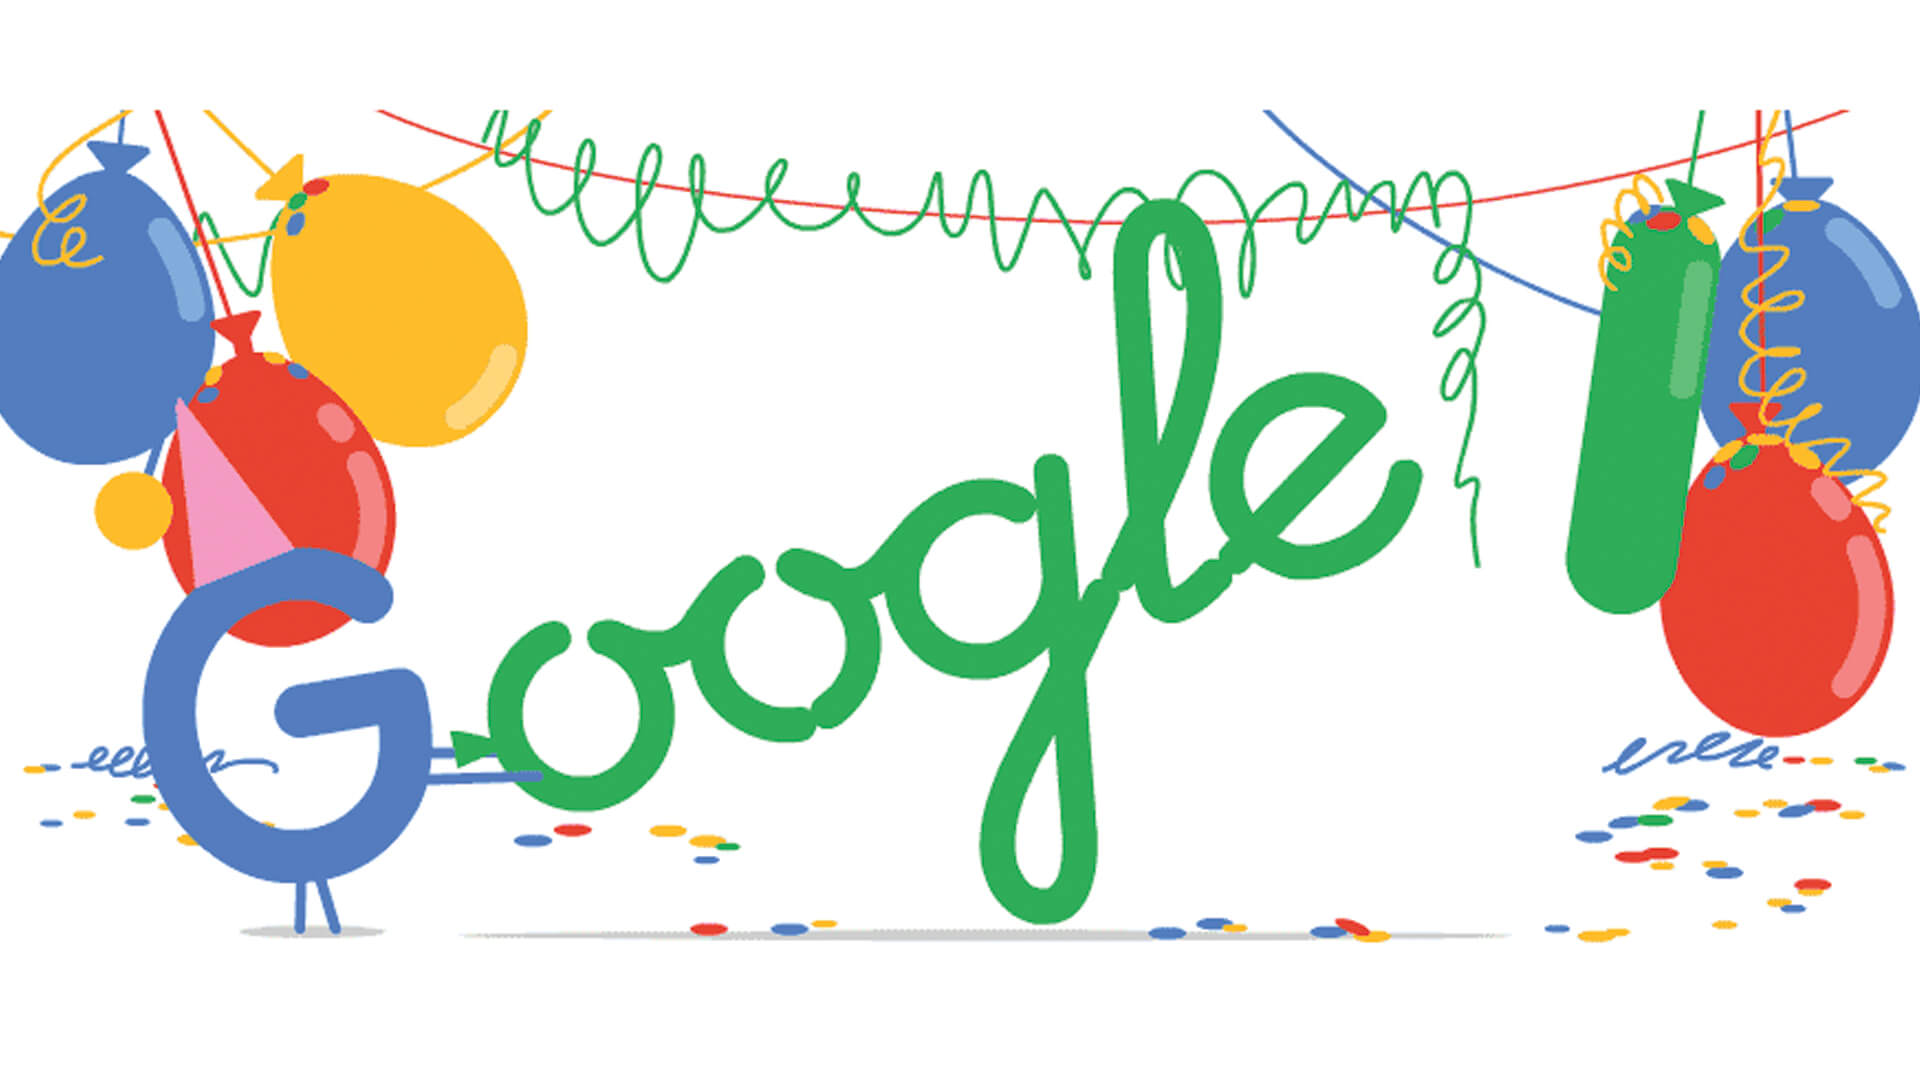 Google 20th Birthday: Google Chrome Celebrates 10th Year, Feeds